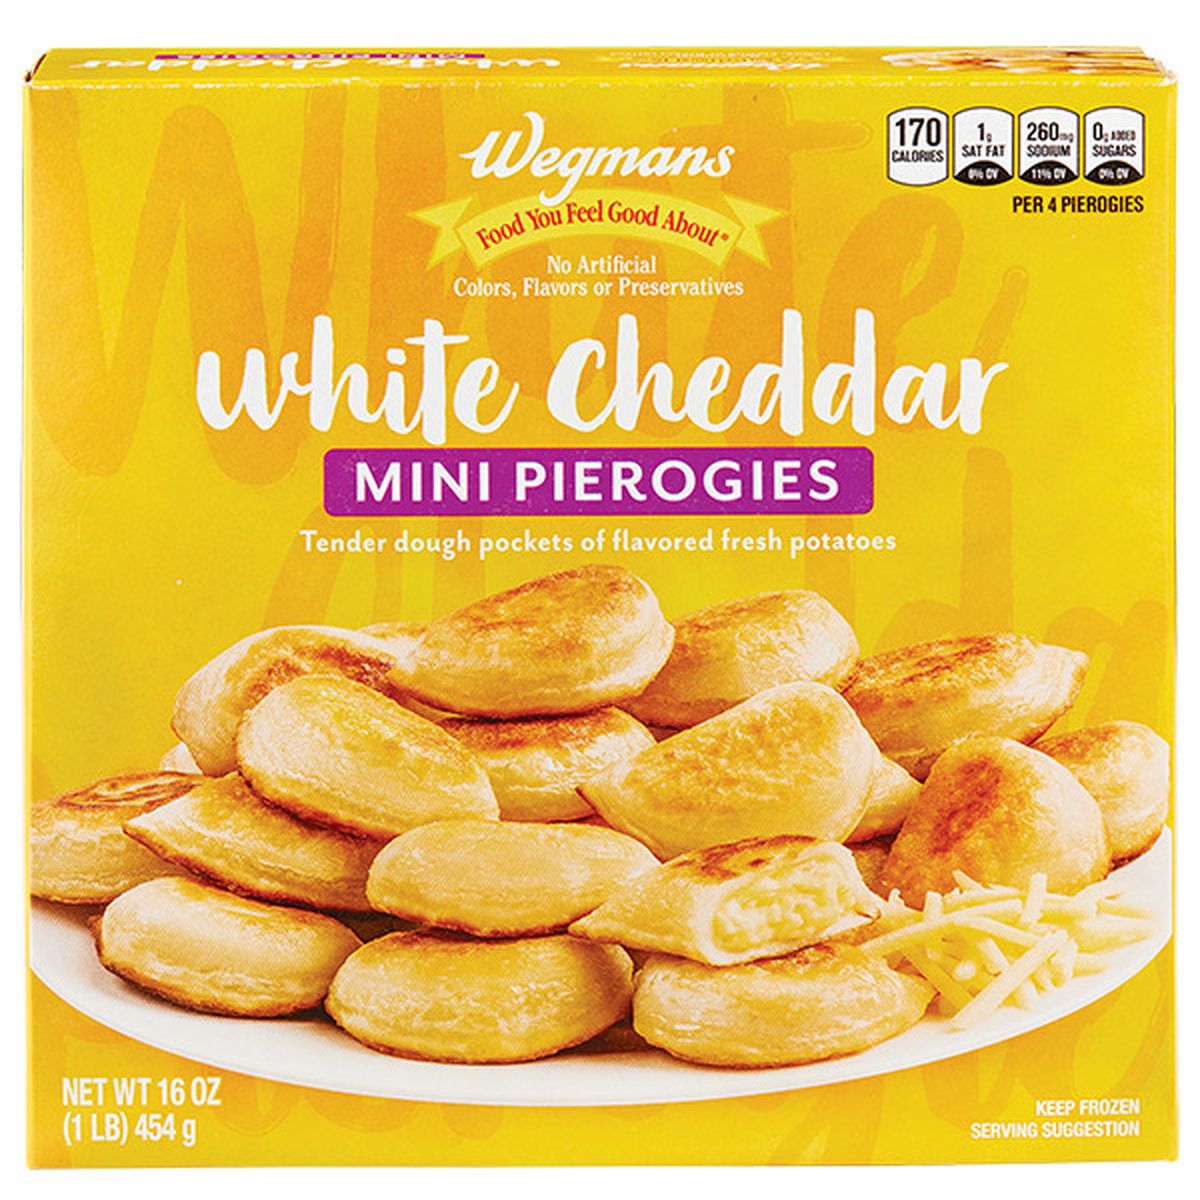 Calories in Wegmans White Cheddar Mini Pierogies